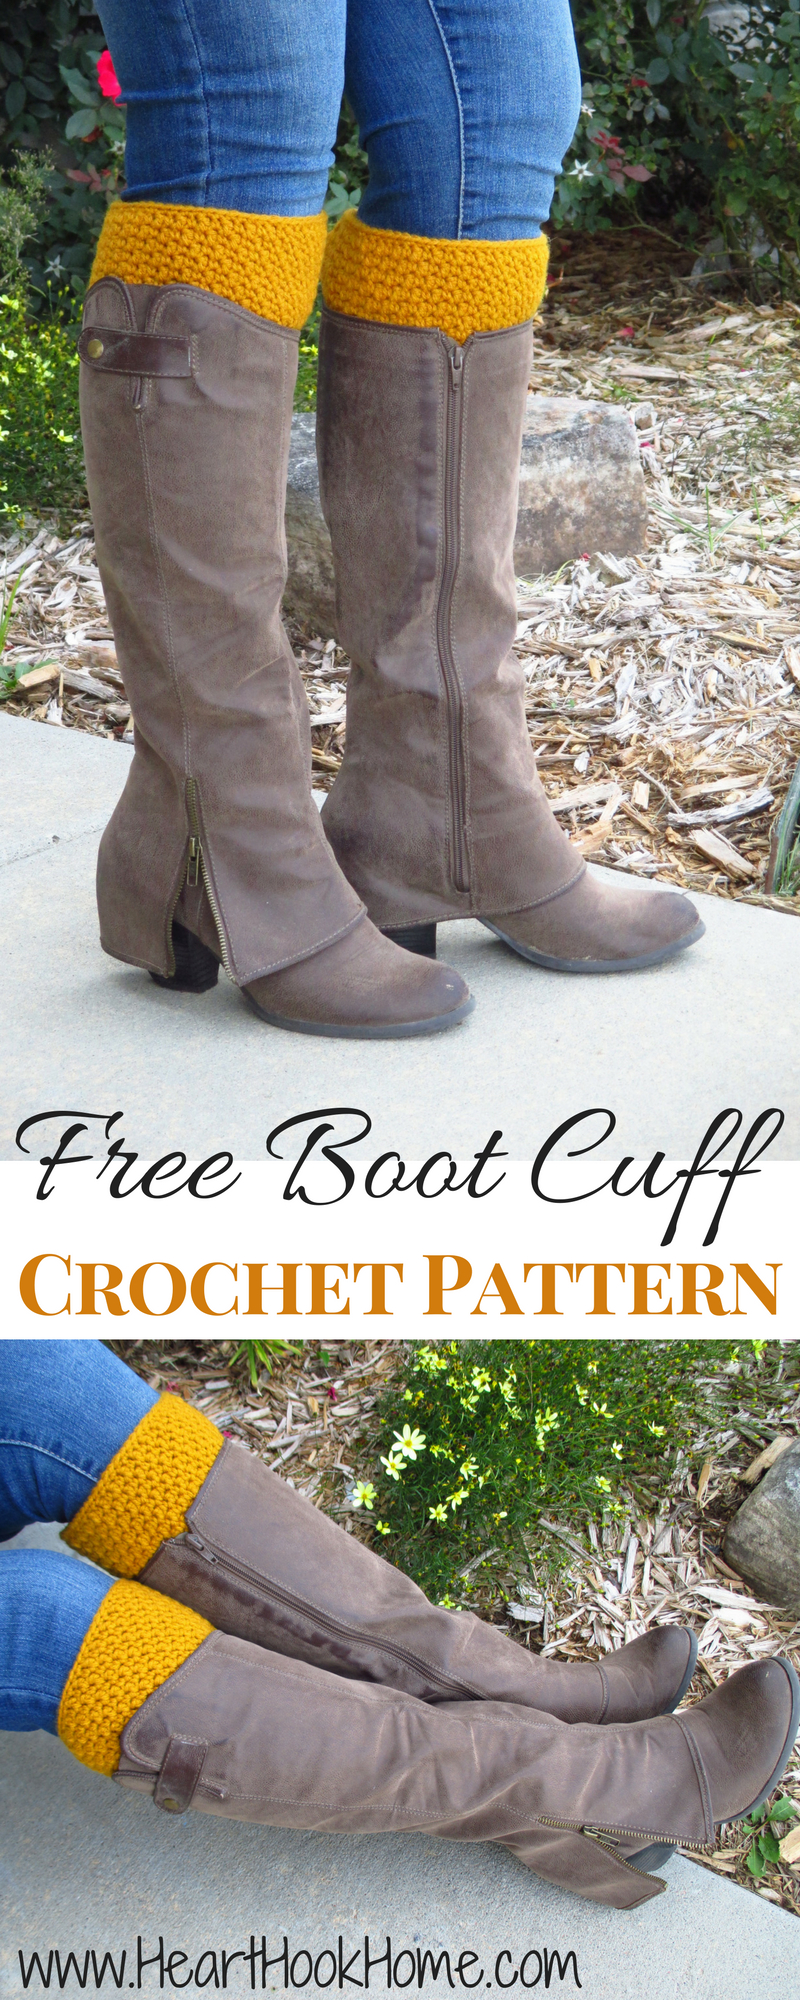 Free Boot Cuff Crochet Patterns Reversible Boot Cuffs A Free Crochet Pattern